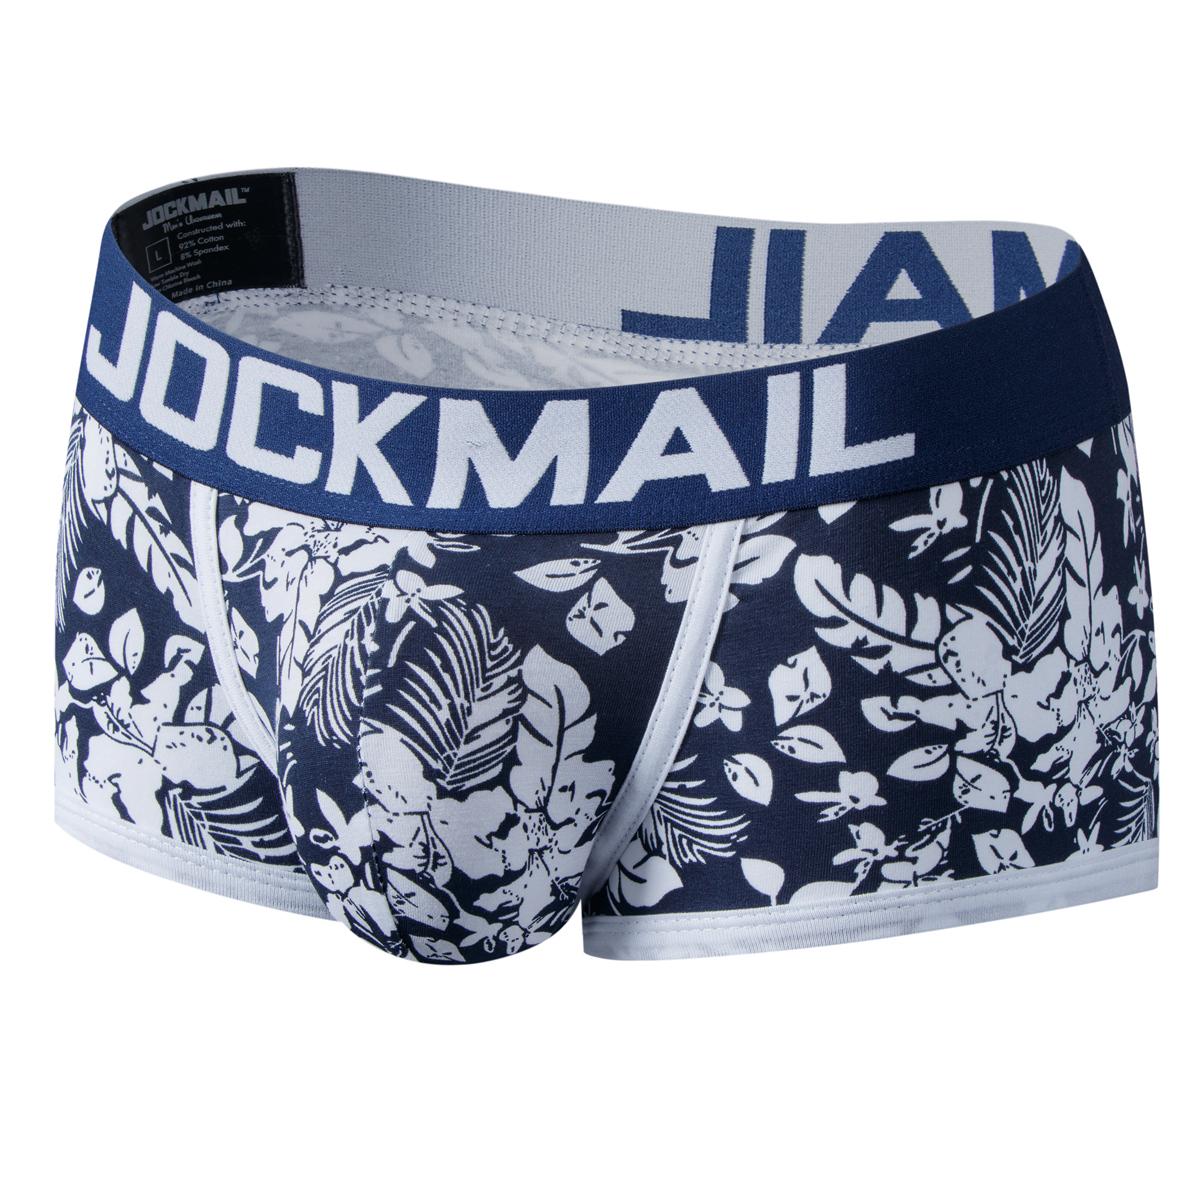 Boxer Jockmail Star Print Low-rise Cotton Breathable Sports Men's Underwear